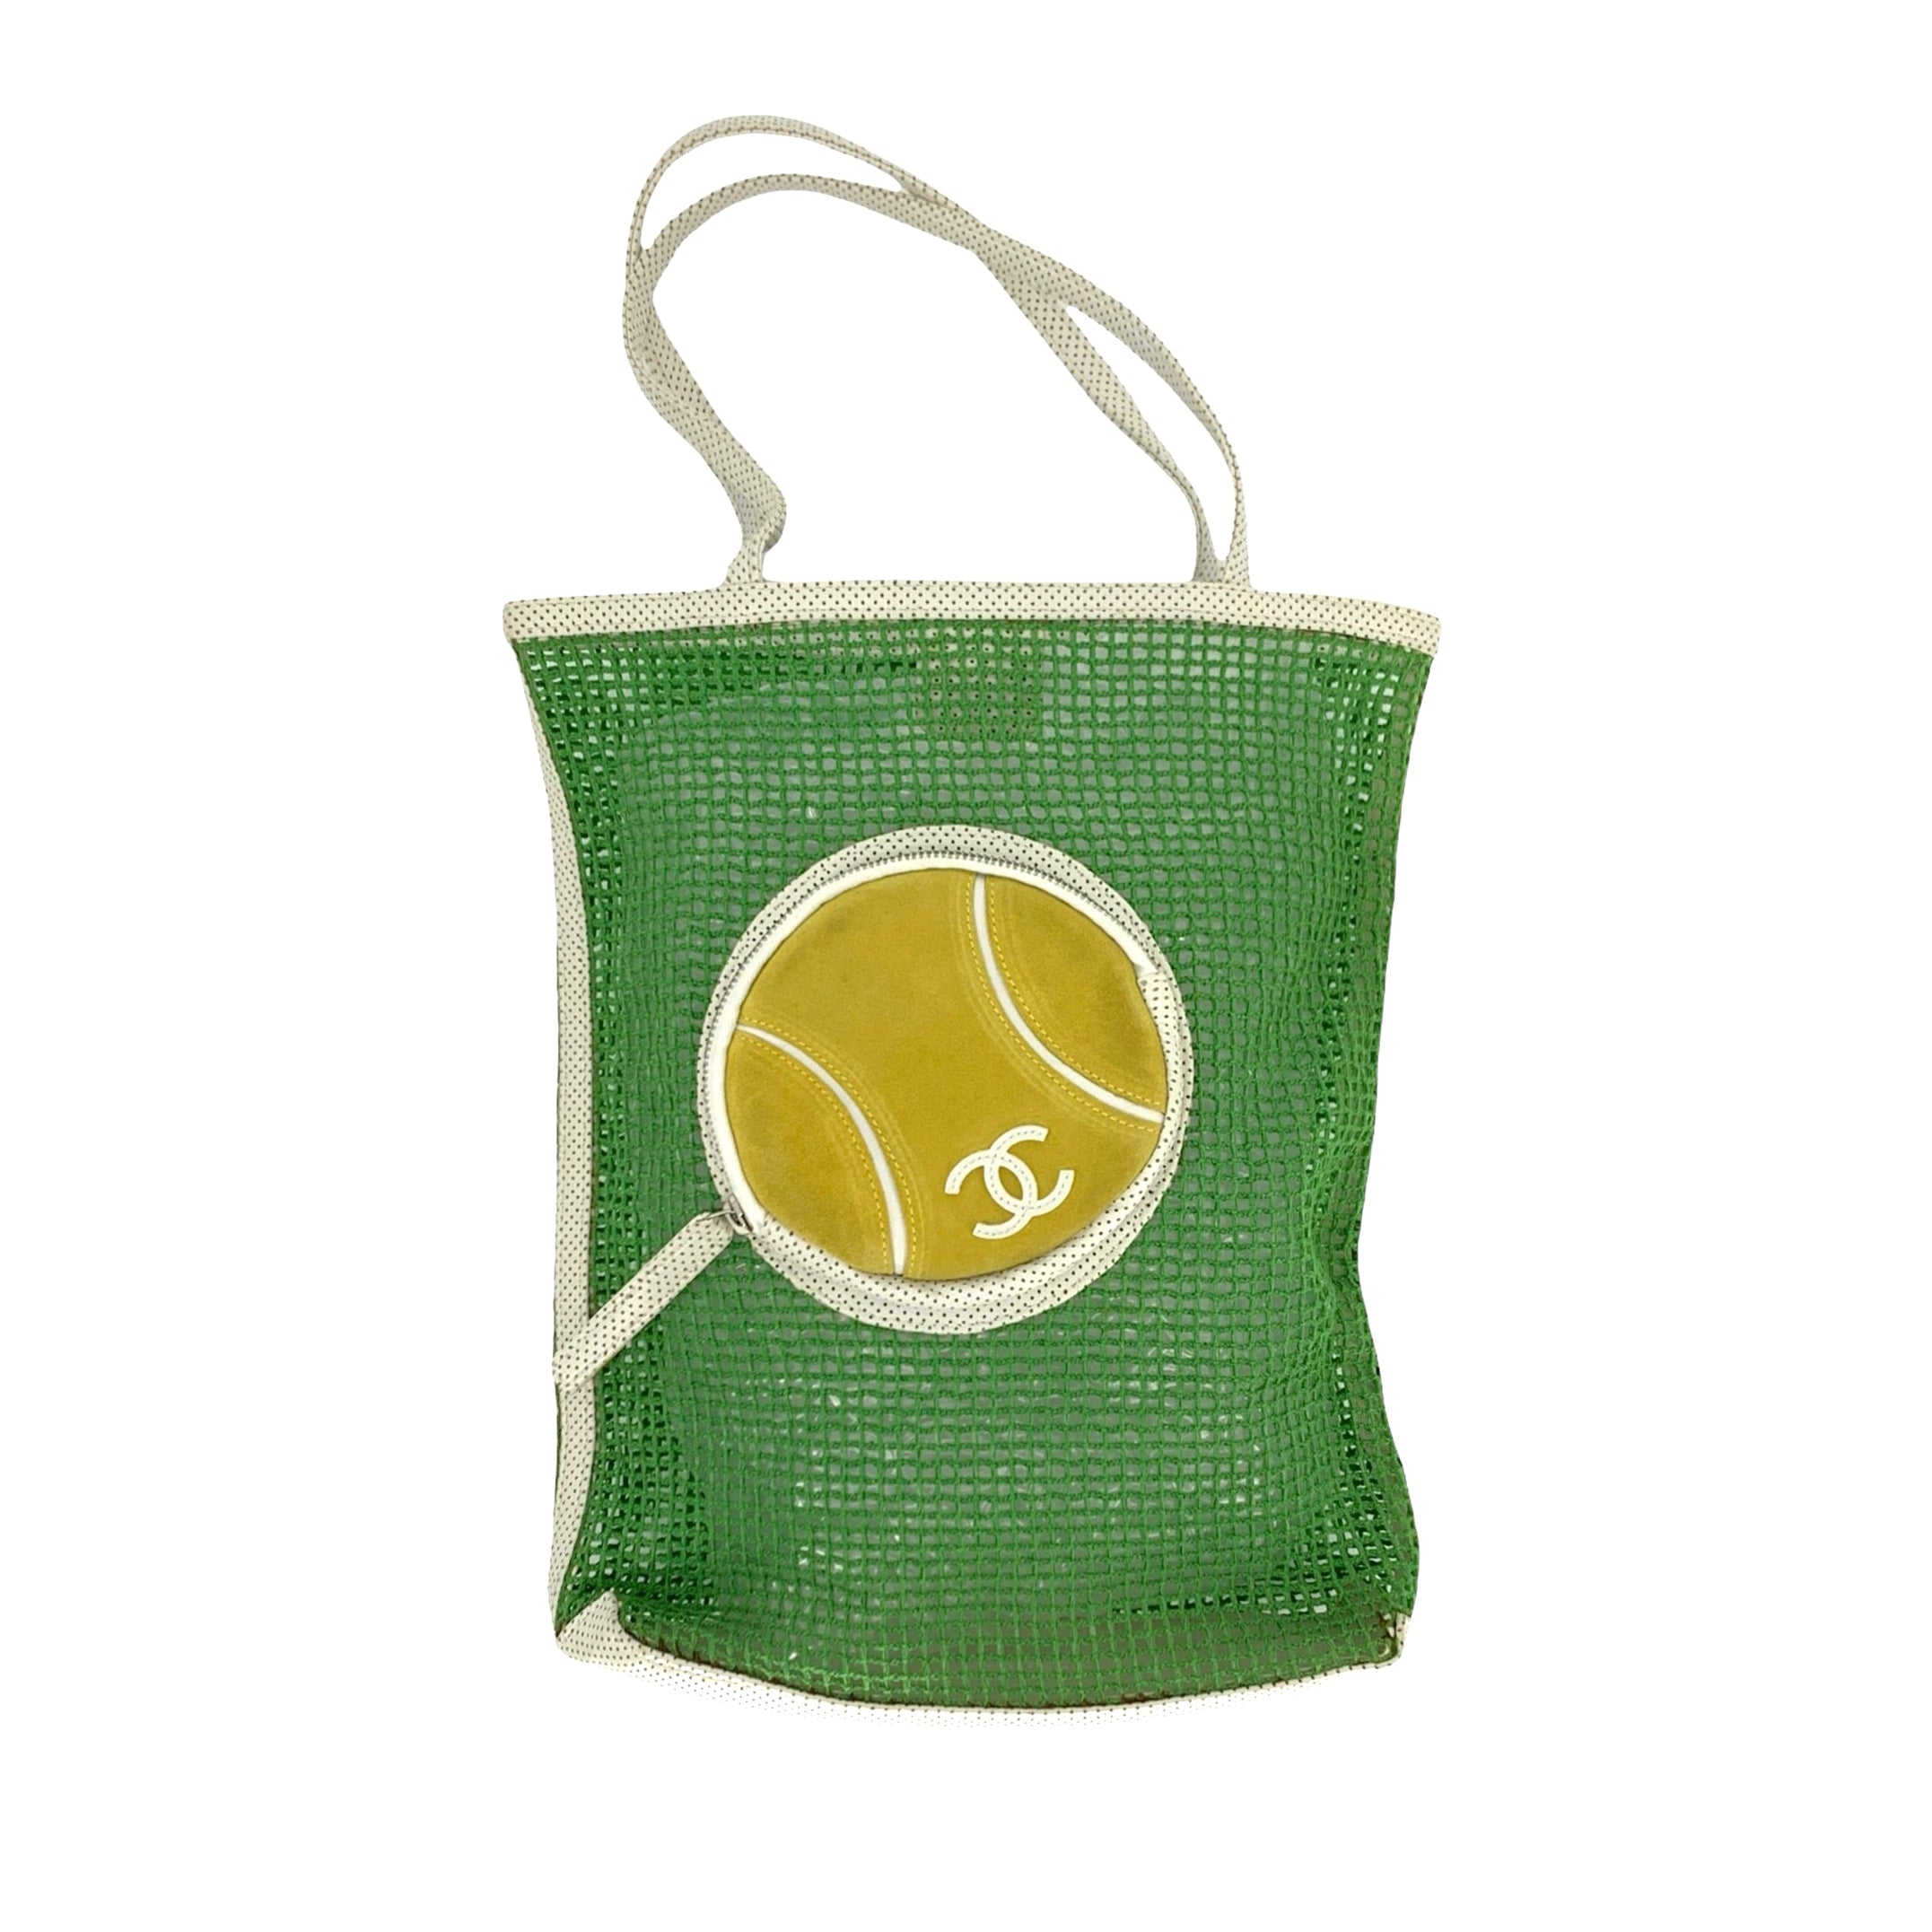 Tennis Bags - 8 For Sale on 1stDibs